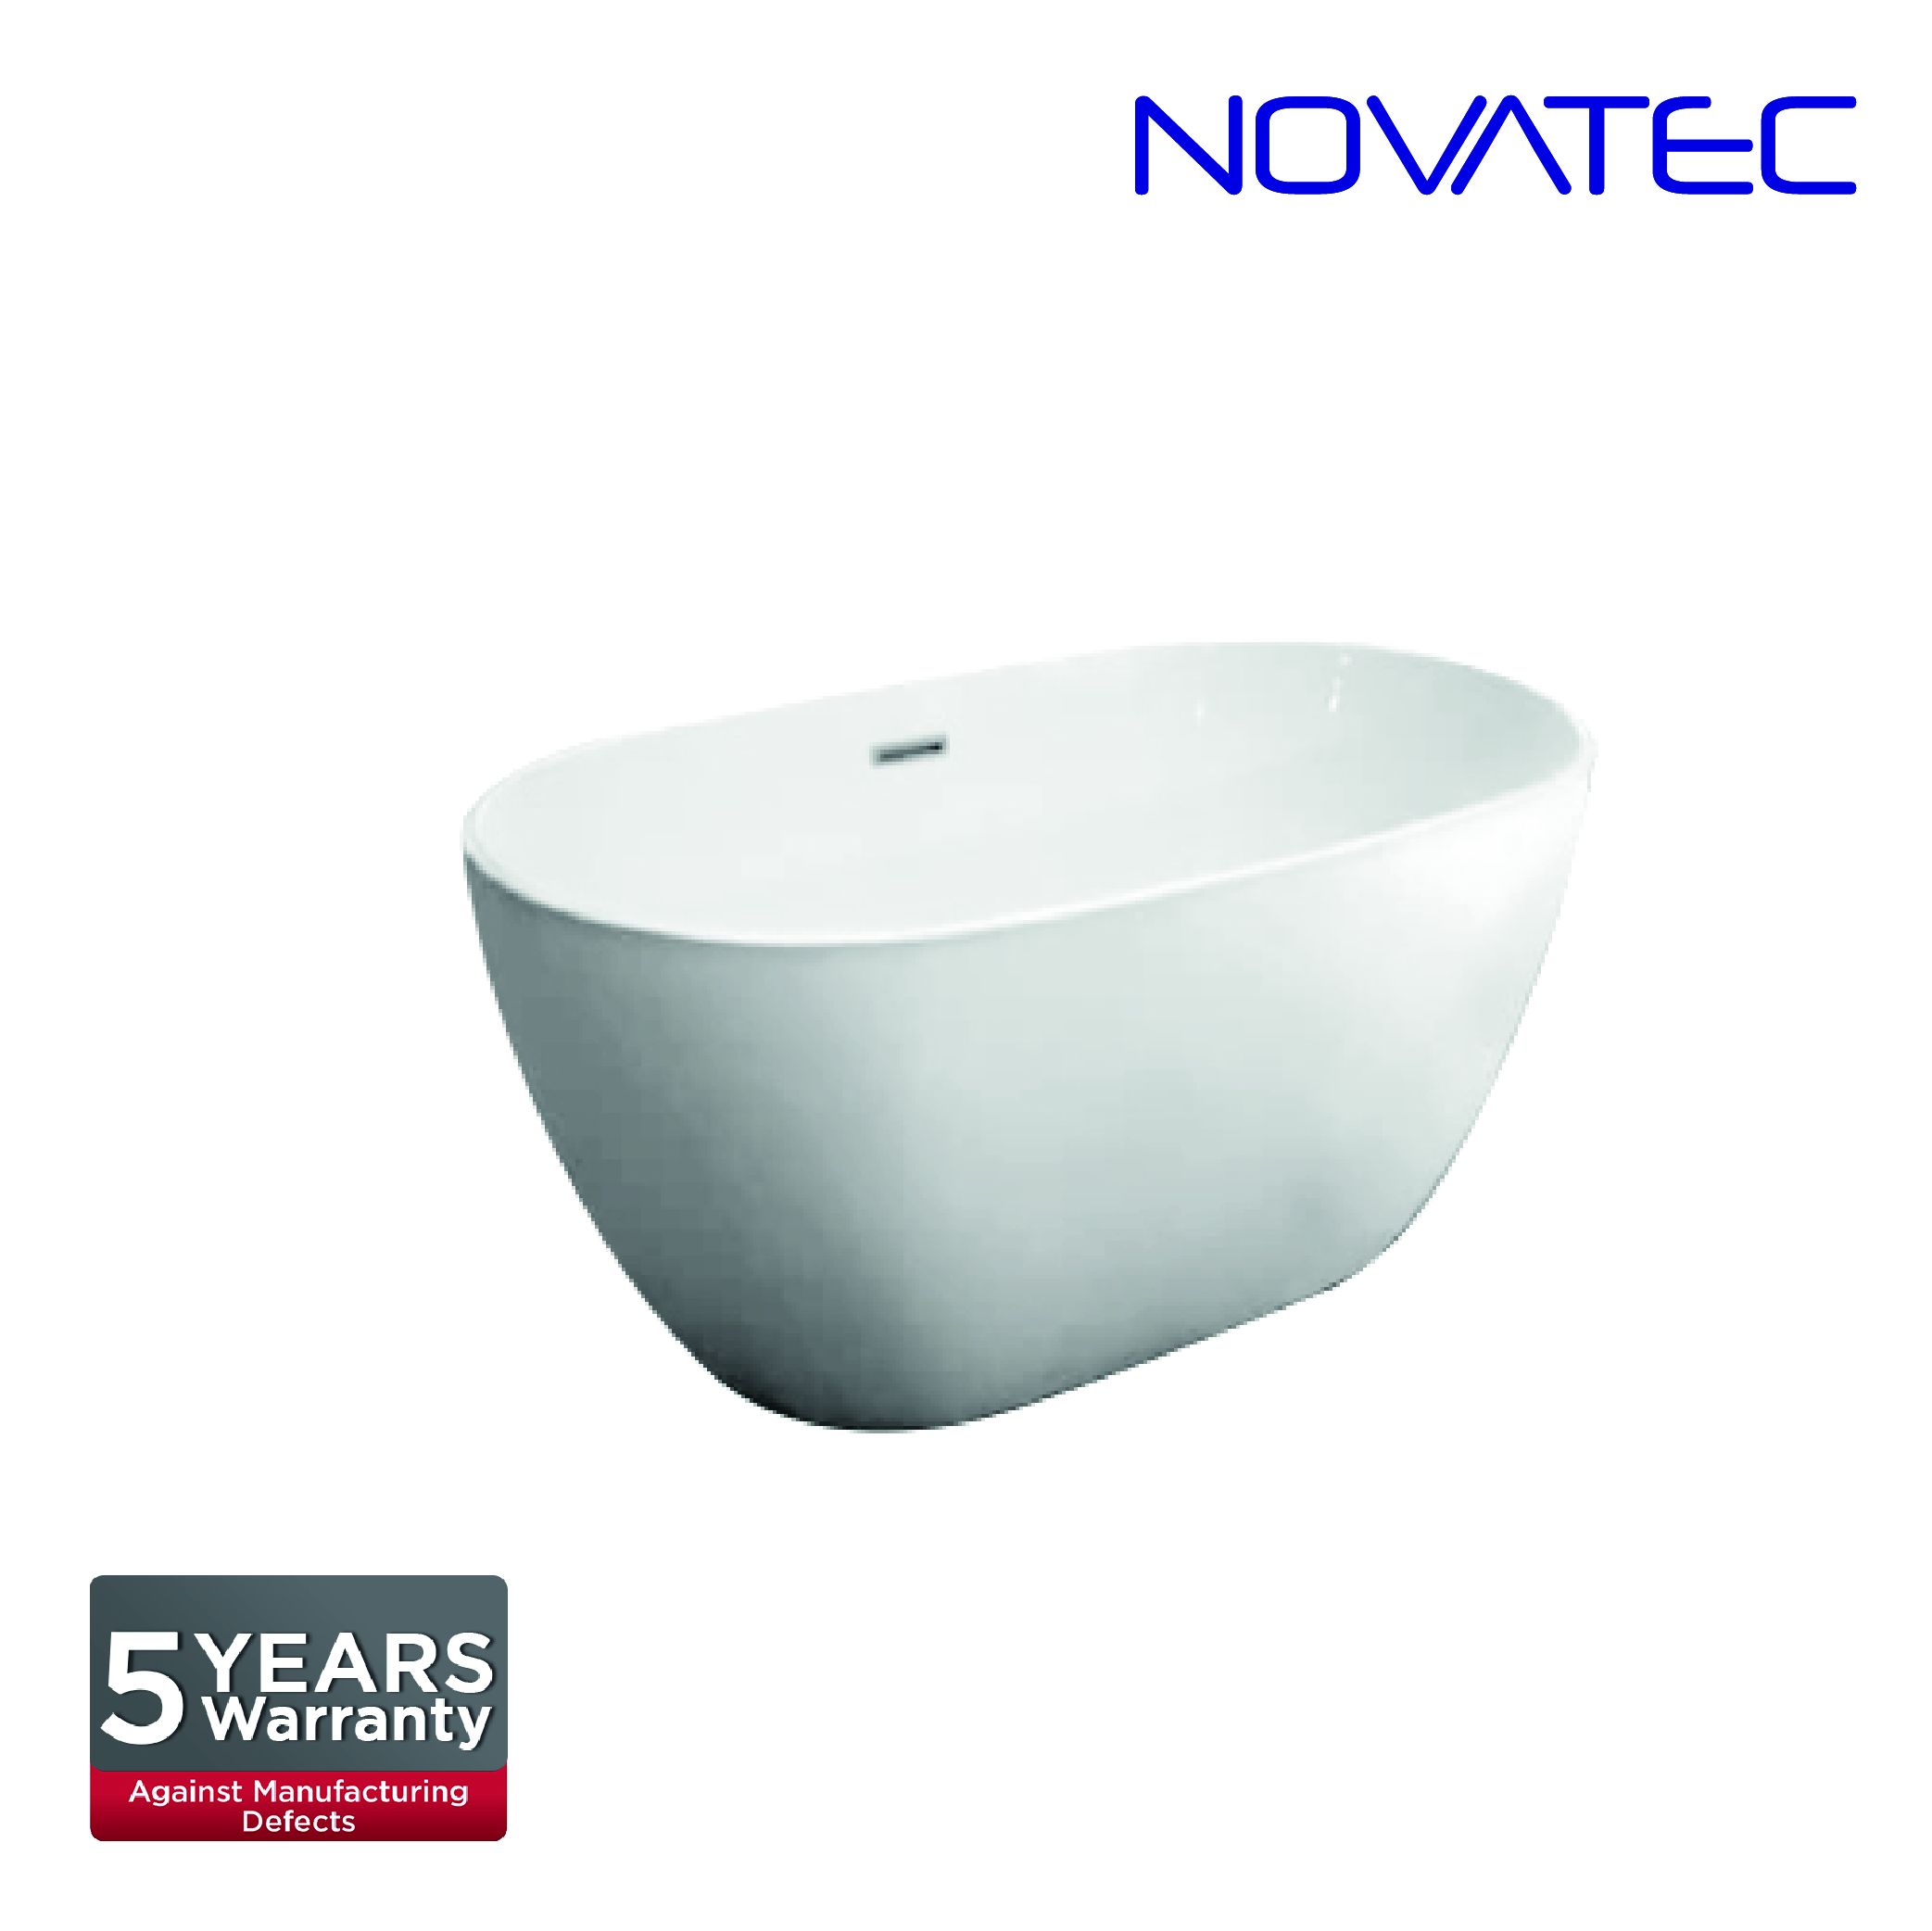 Novatec SW Geneva Bath Tub BT 160014C